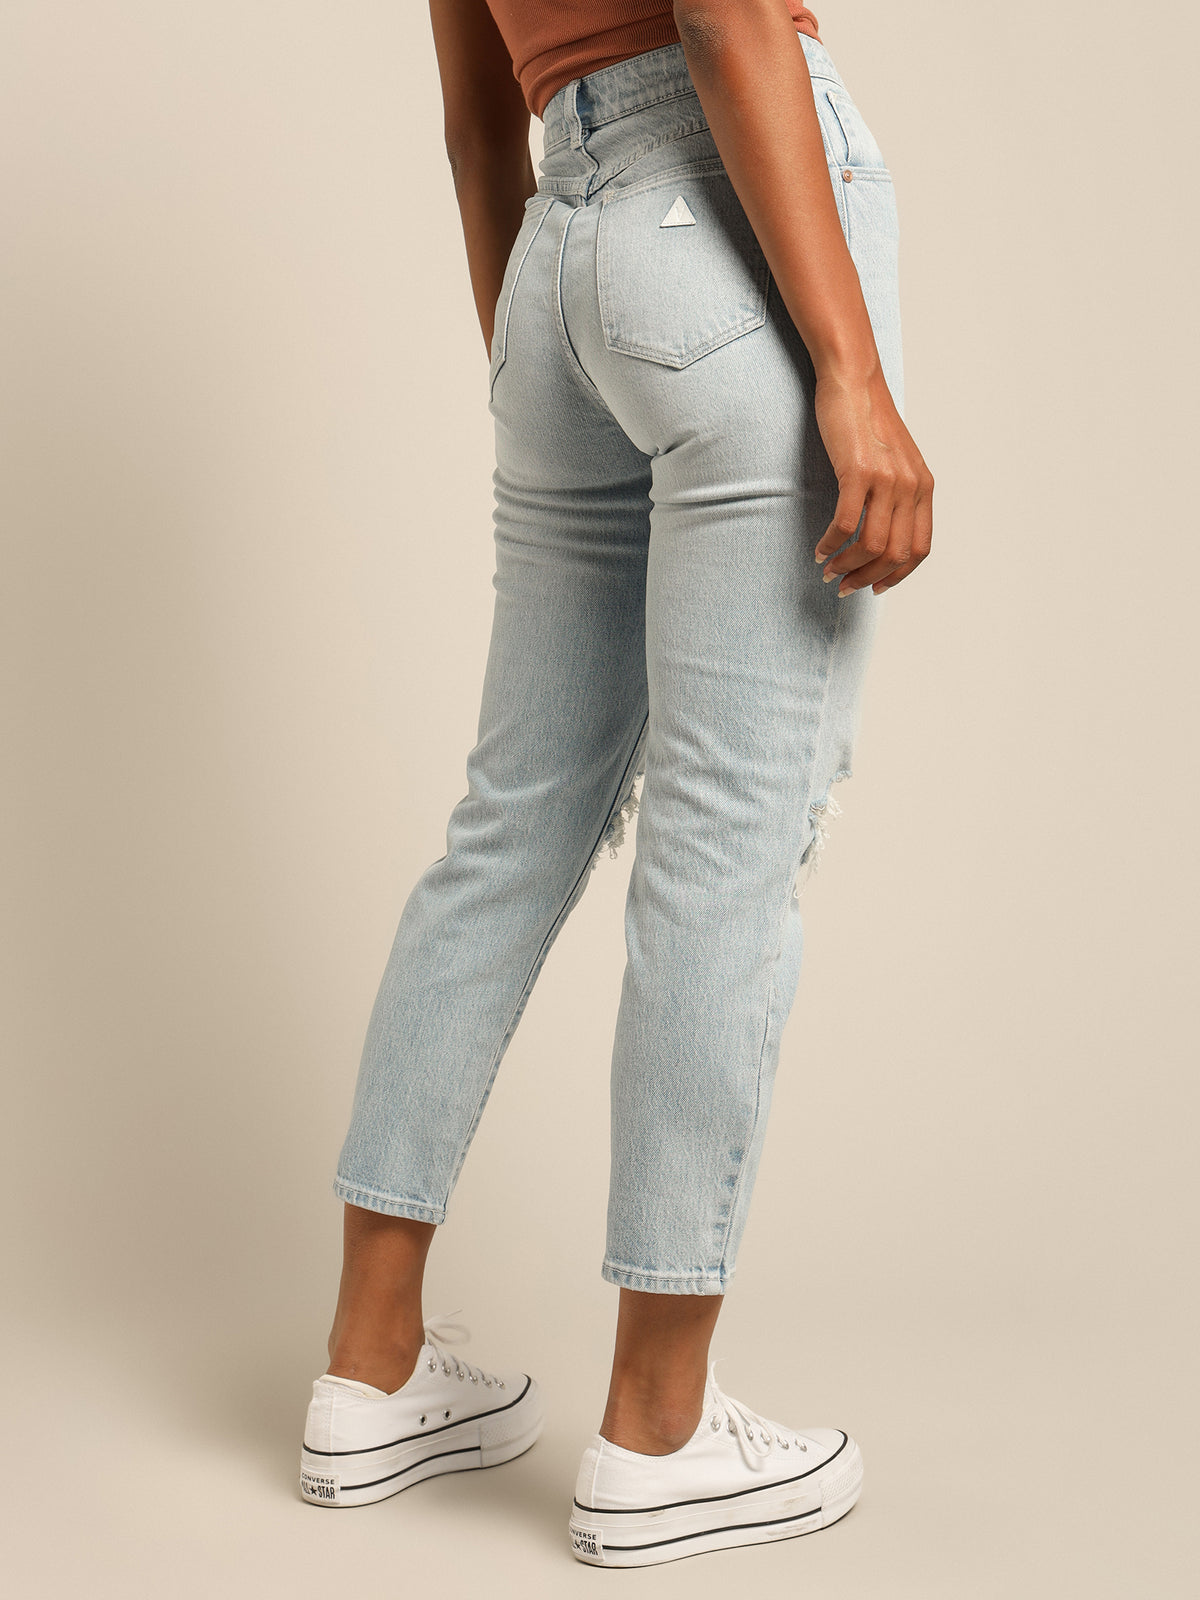 A 94 High Slim Jeans in Gina Rip